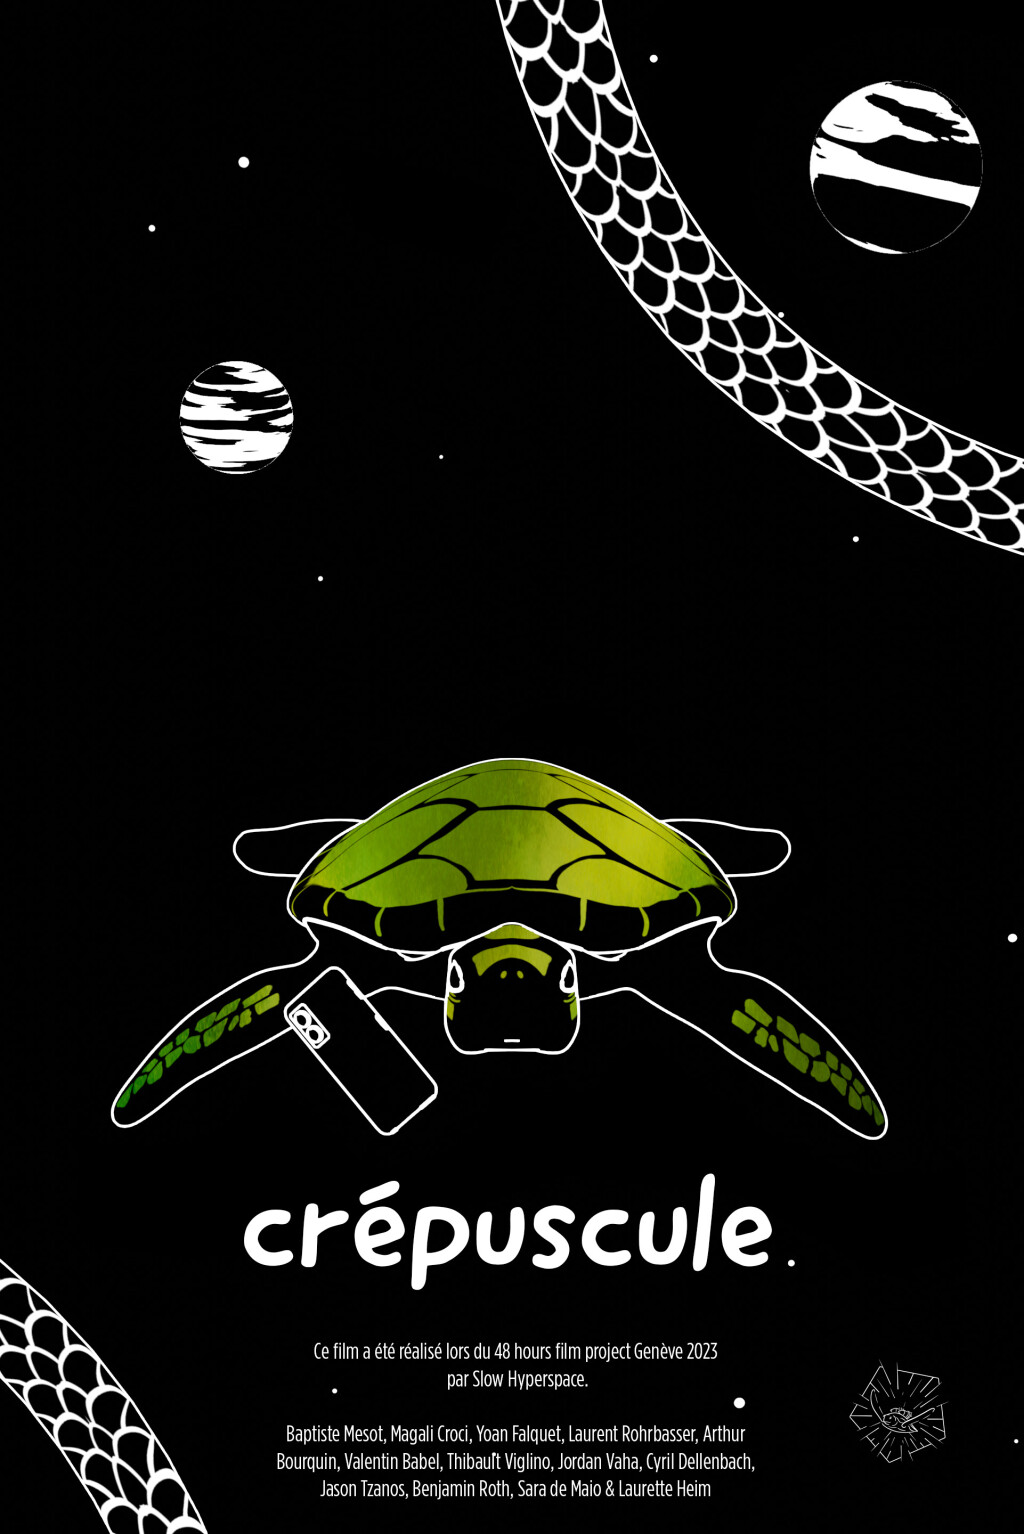 Filmposter for Crépuscule